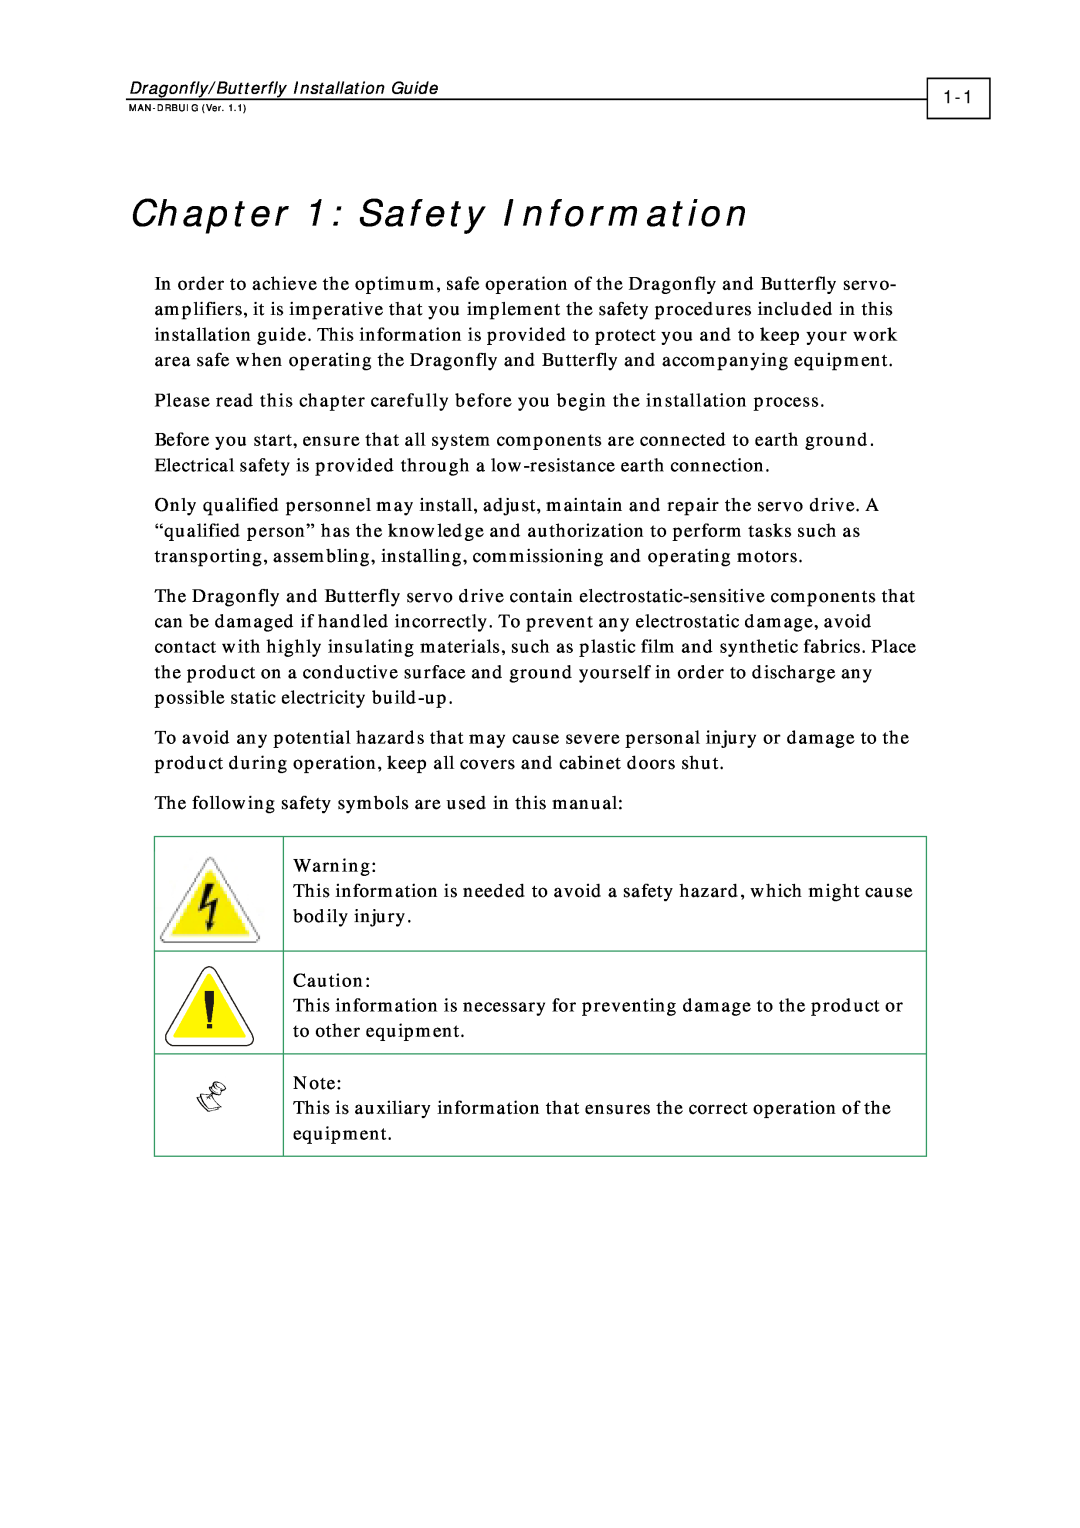 Elmo ExtrIQ Dragonfly/Butterfly, DRA- X/YY, BUT- X/YYY manual Safety Information 